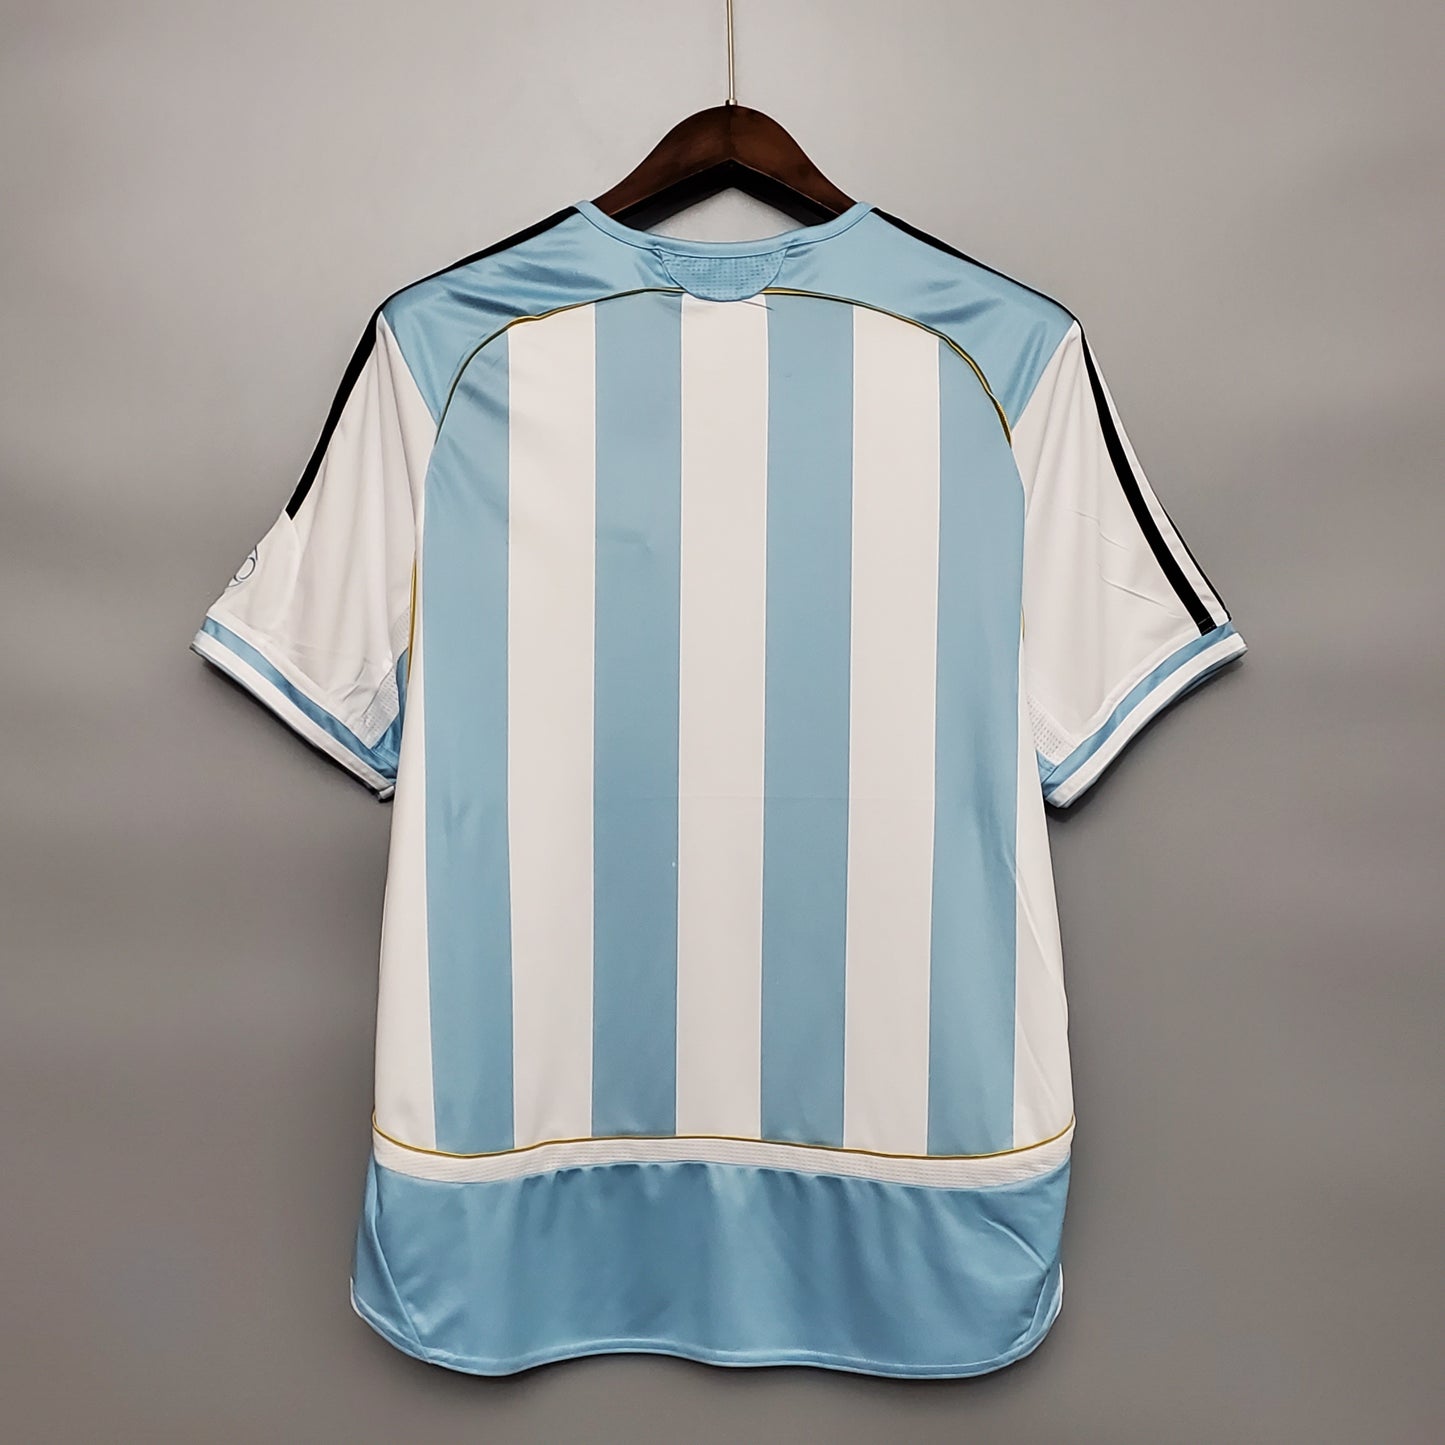 Argentina 2006 Home Shirt